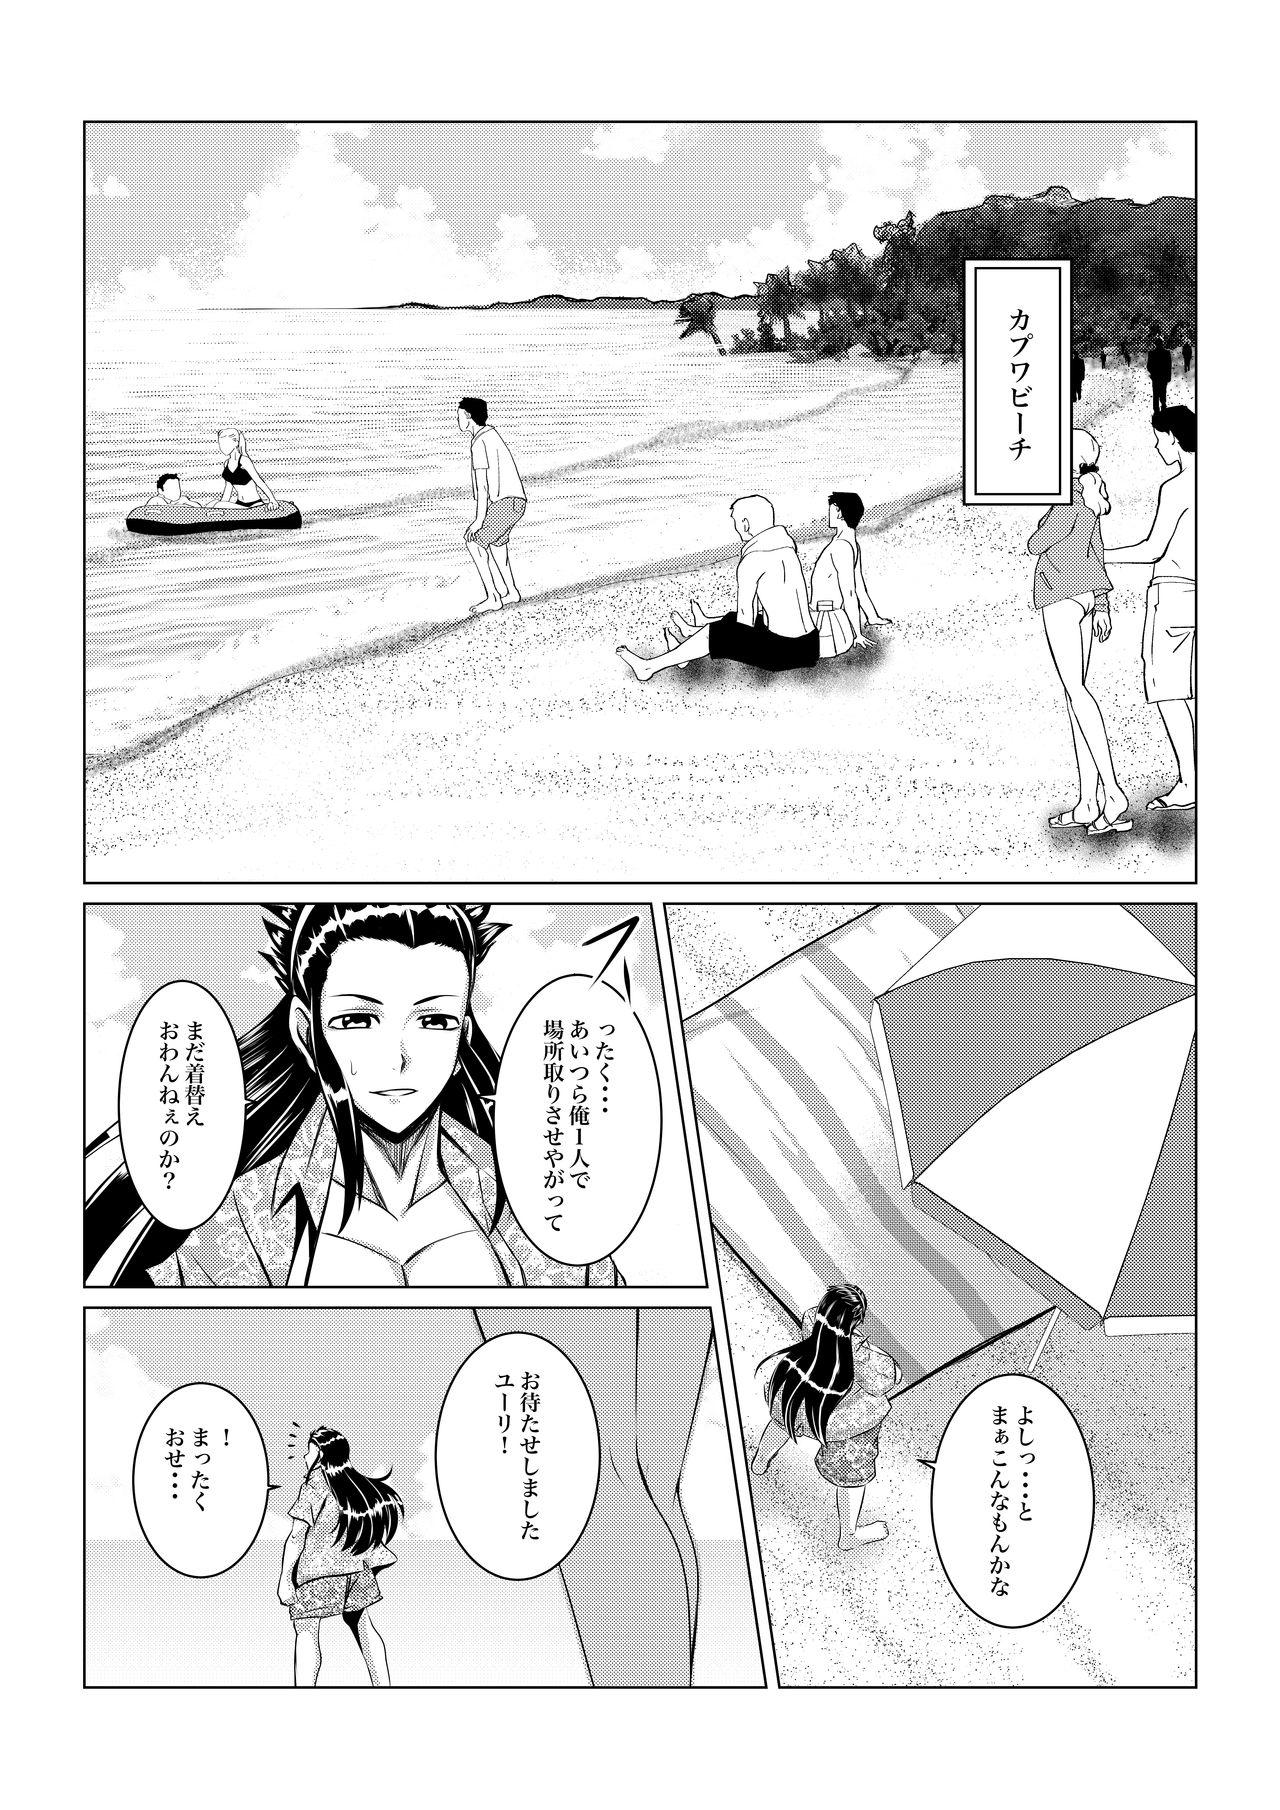  Gekka Midarezaki - Tales of vesperia Couch - Page 2